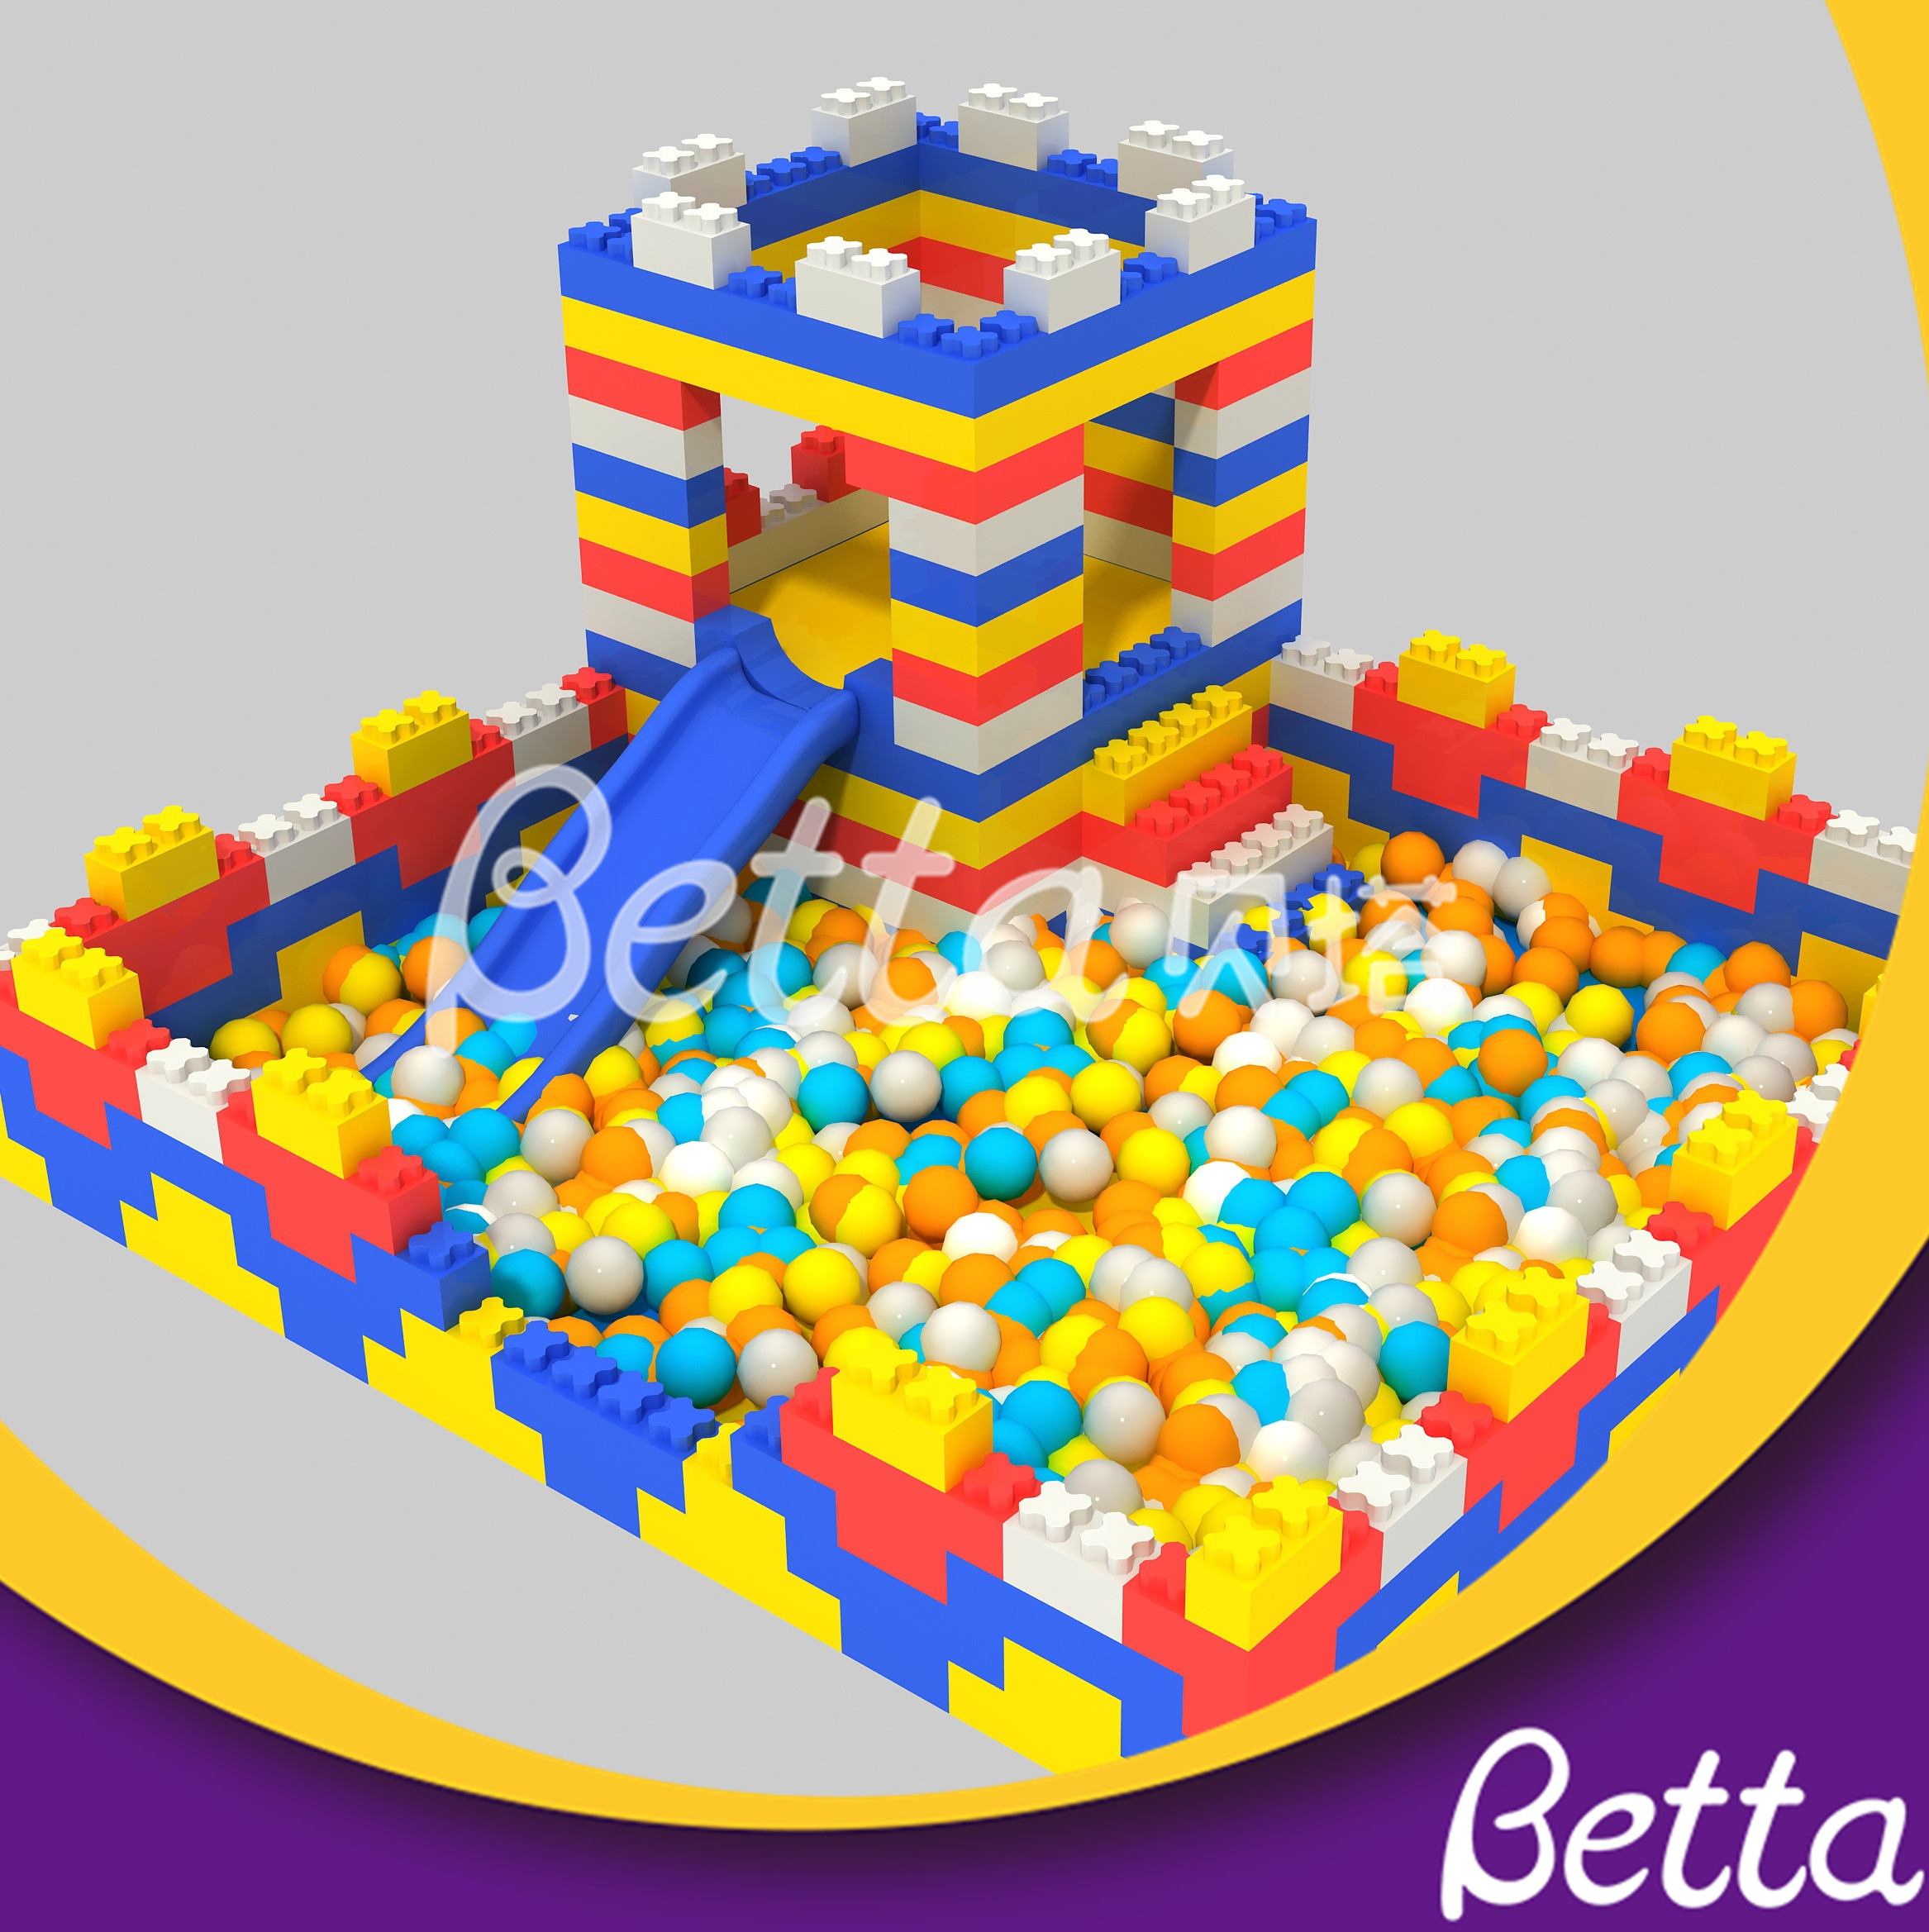 Betta Epp Foam Block Building DIY Educational Toy for Children Indoor Playground